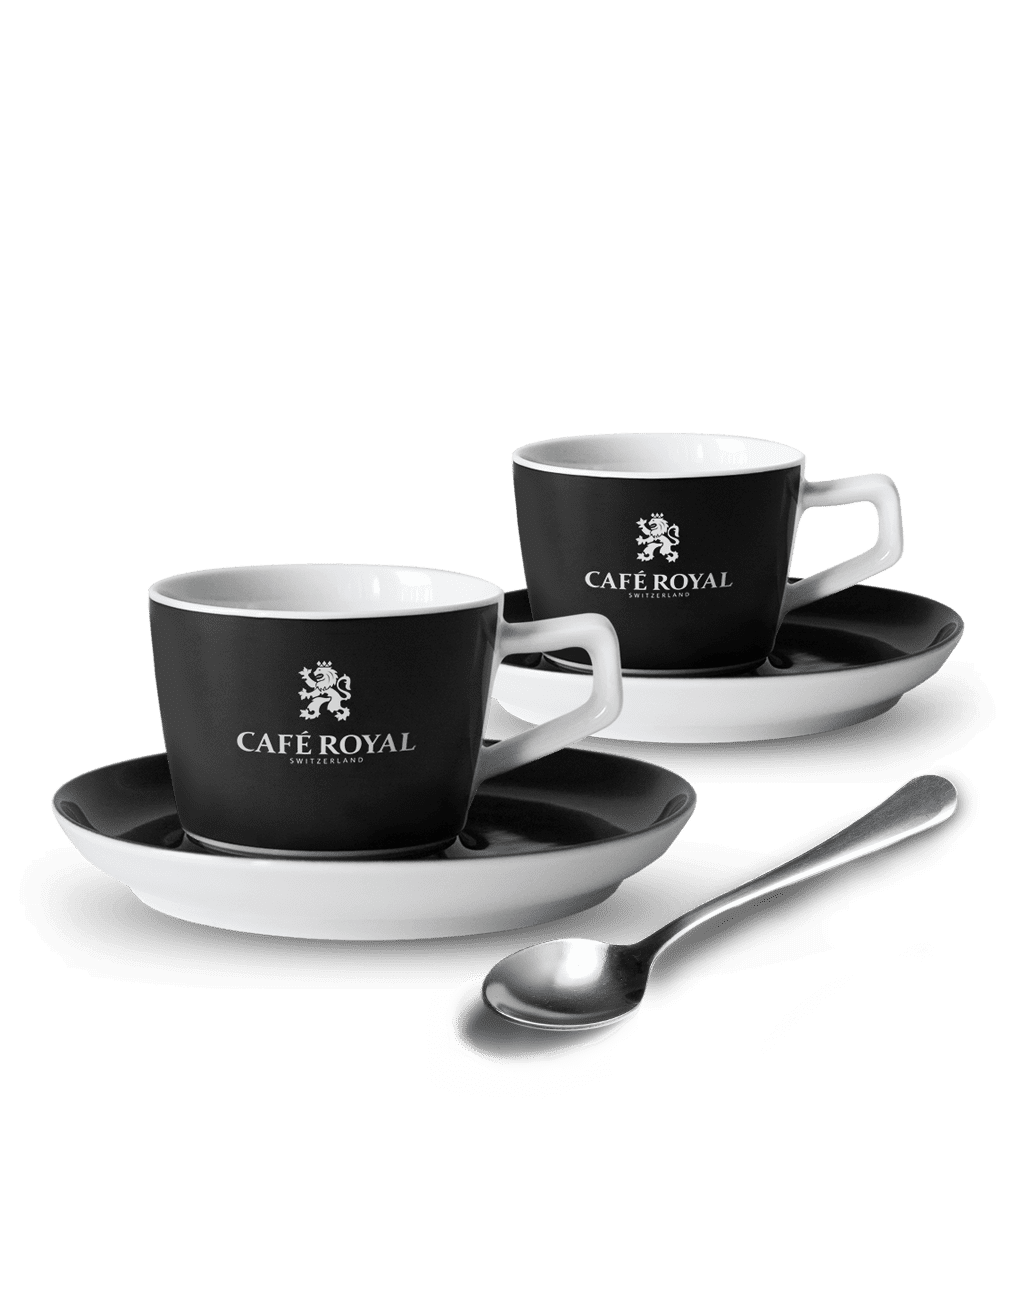 ▷ Tasse à cappuccino - 2 tasses en céramique de 250ml à l'aspect